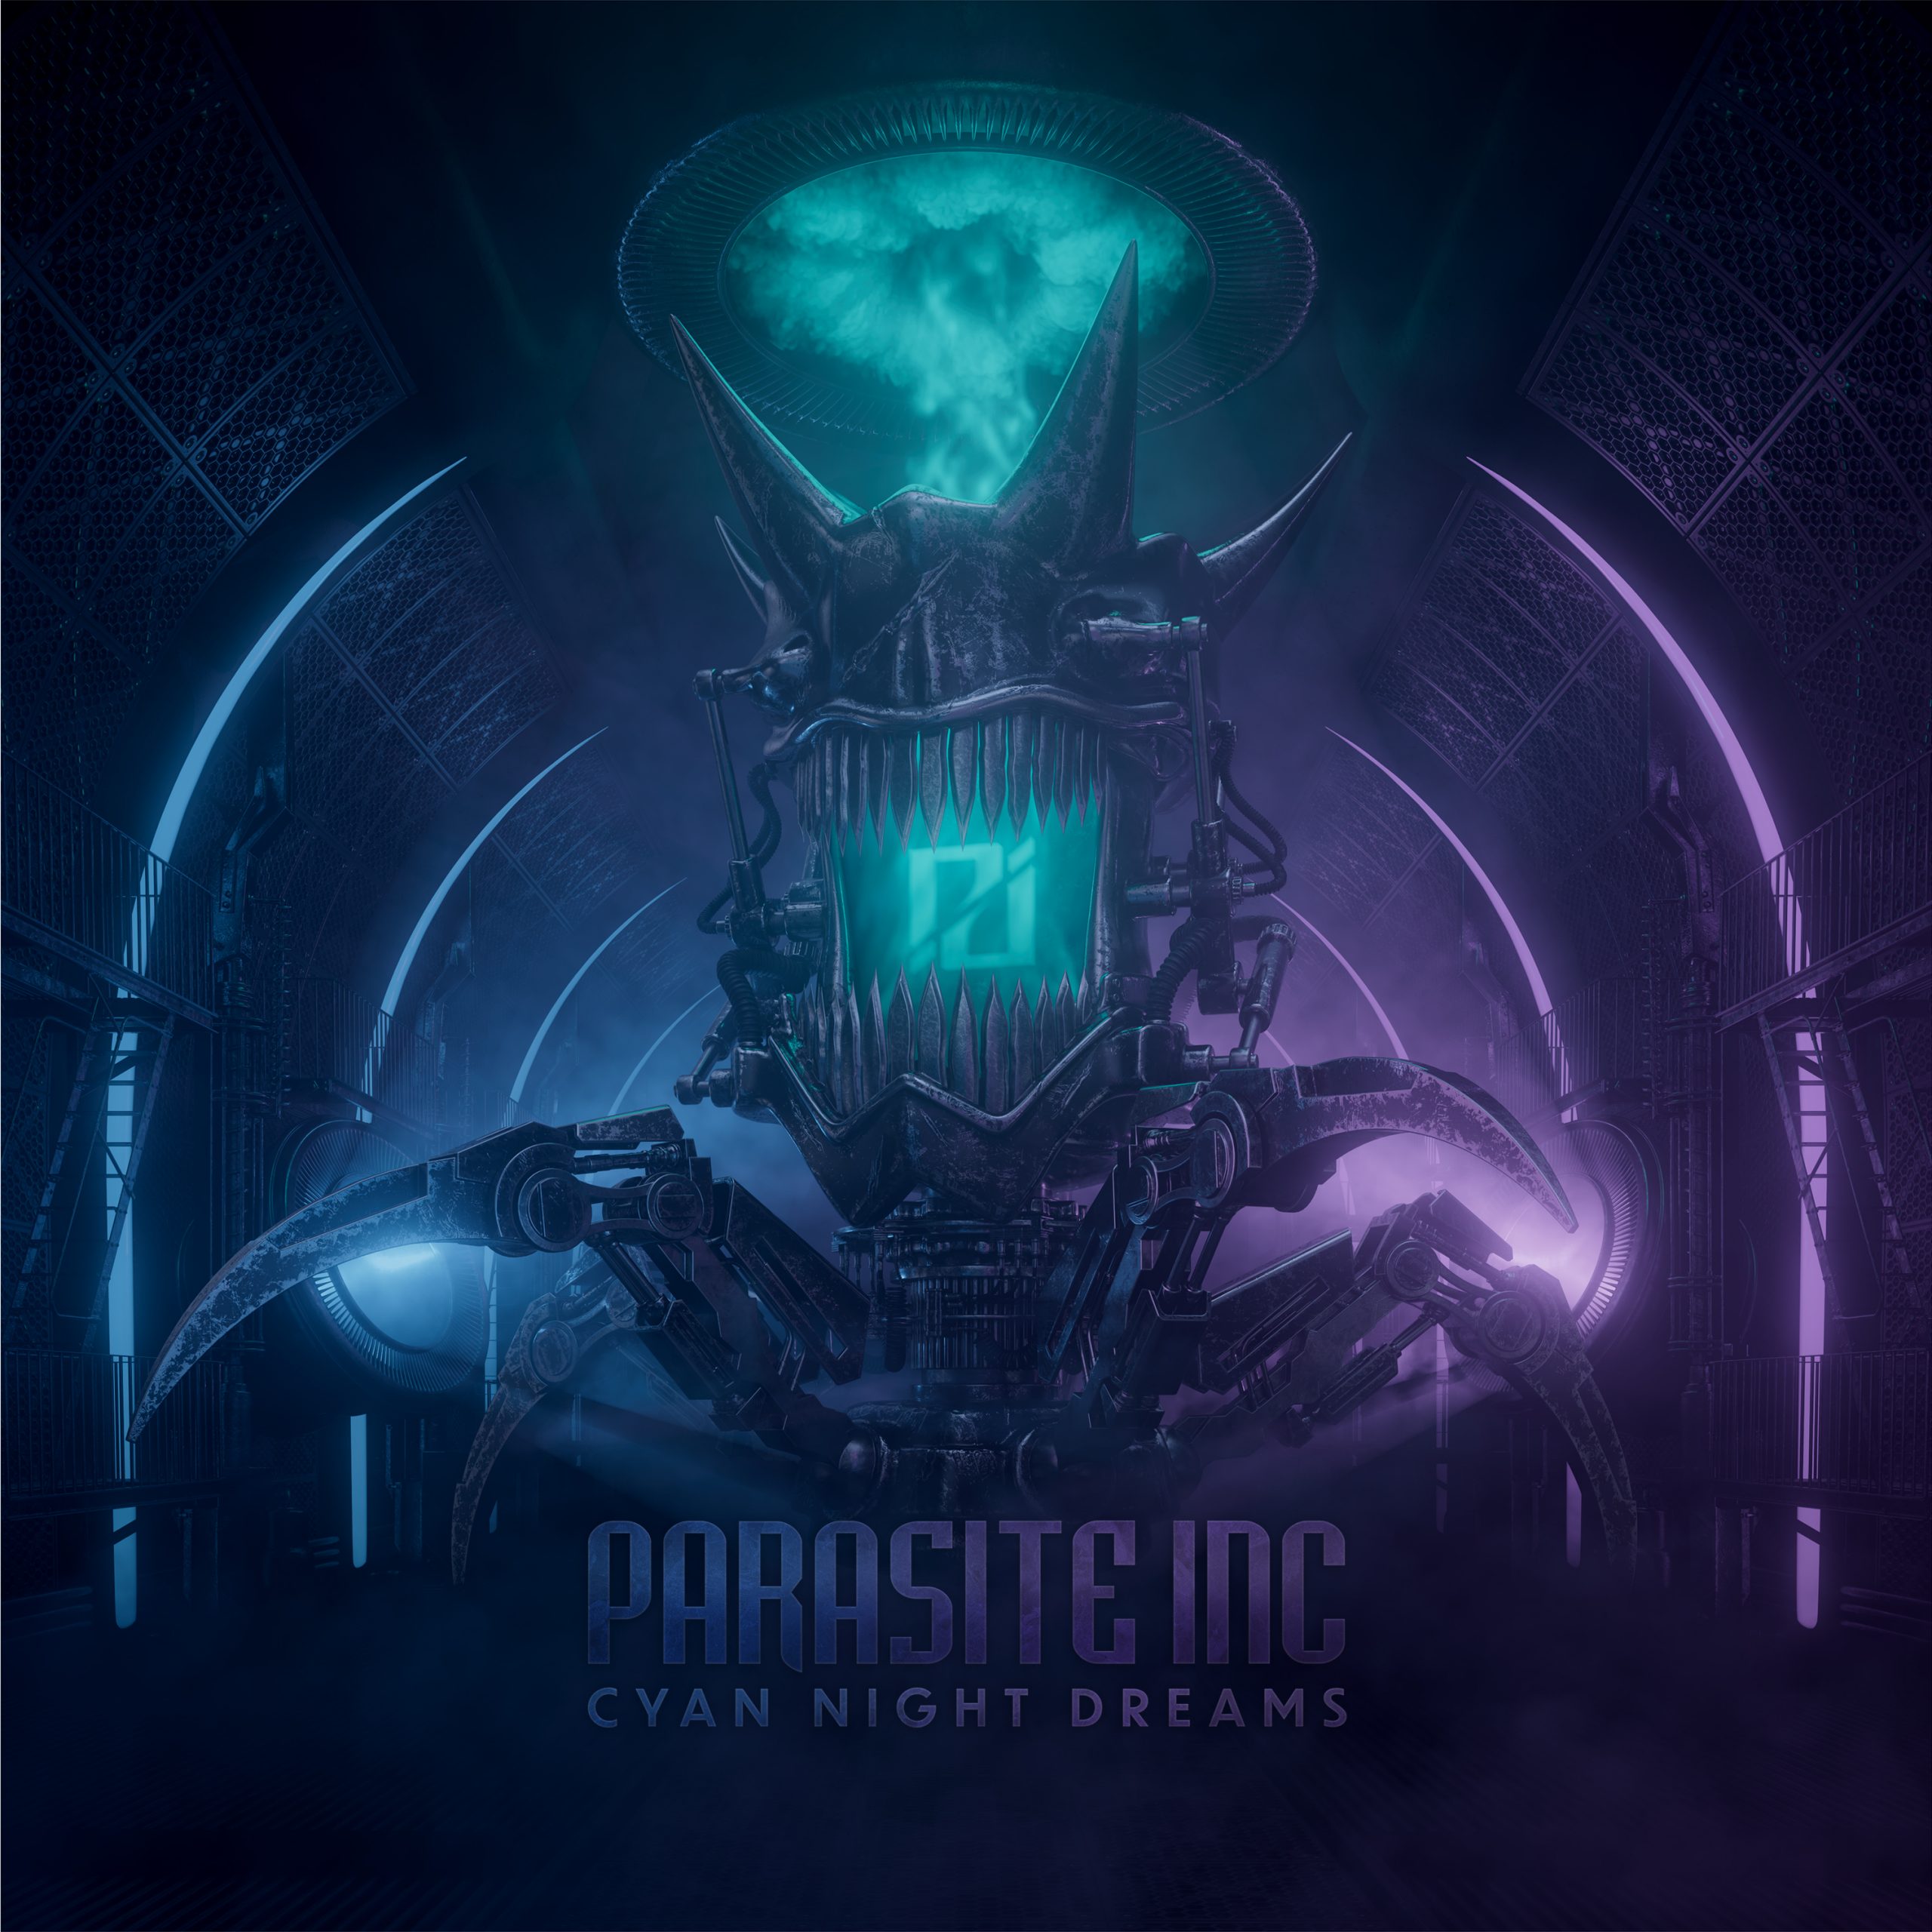 parasite-inc-neues-video-zu-cyan-night-dreams-online